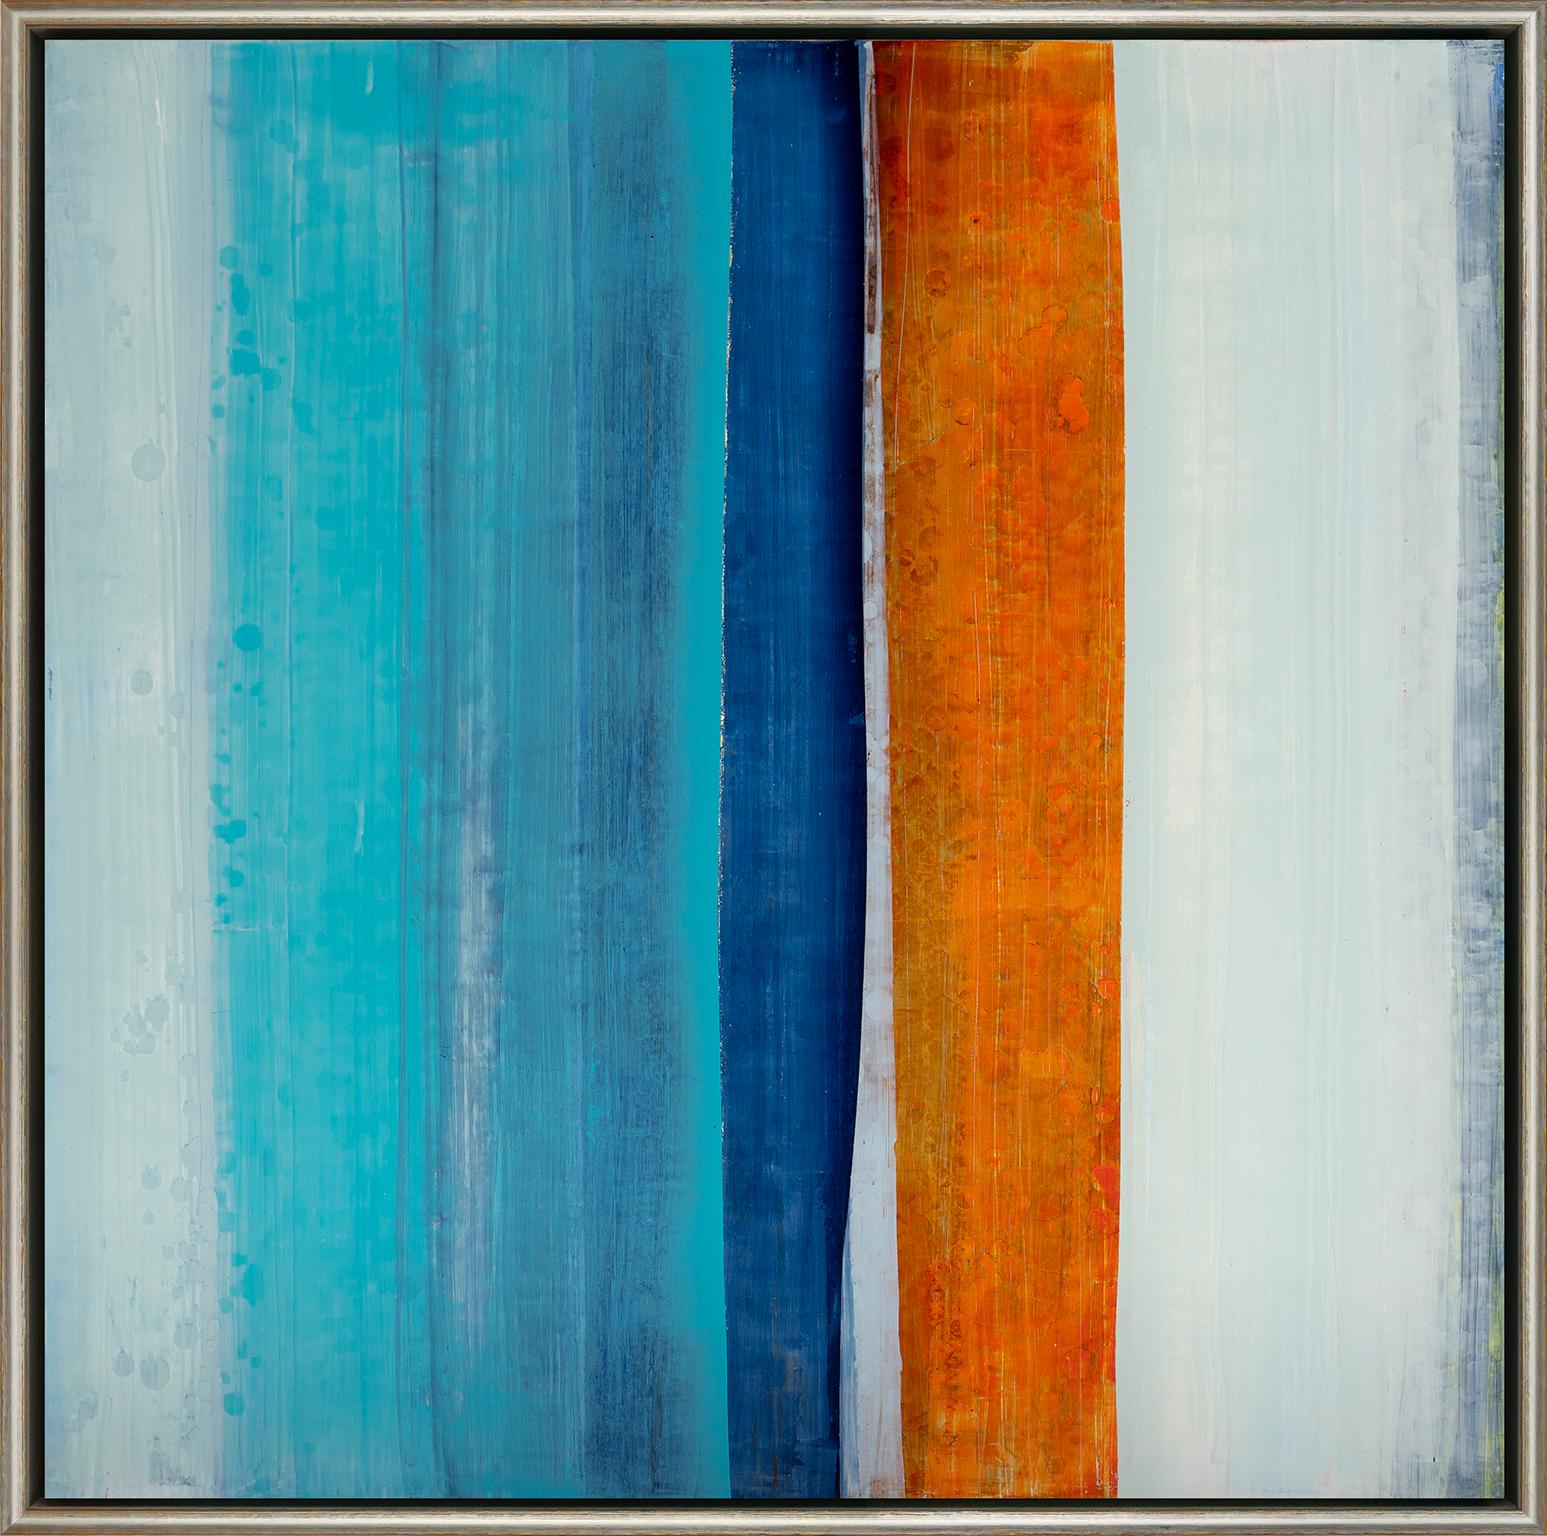 Jeff Erickson Abstract Painting - "The Five Senses: Orange Slices" Blues, Orange, and White on Panel